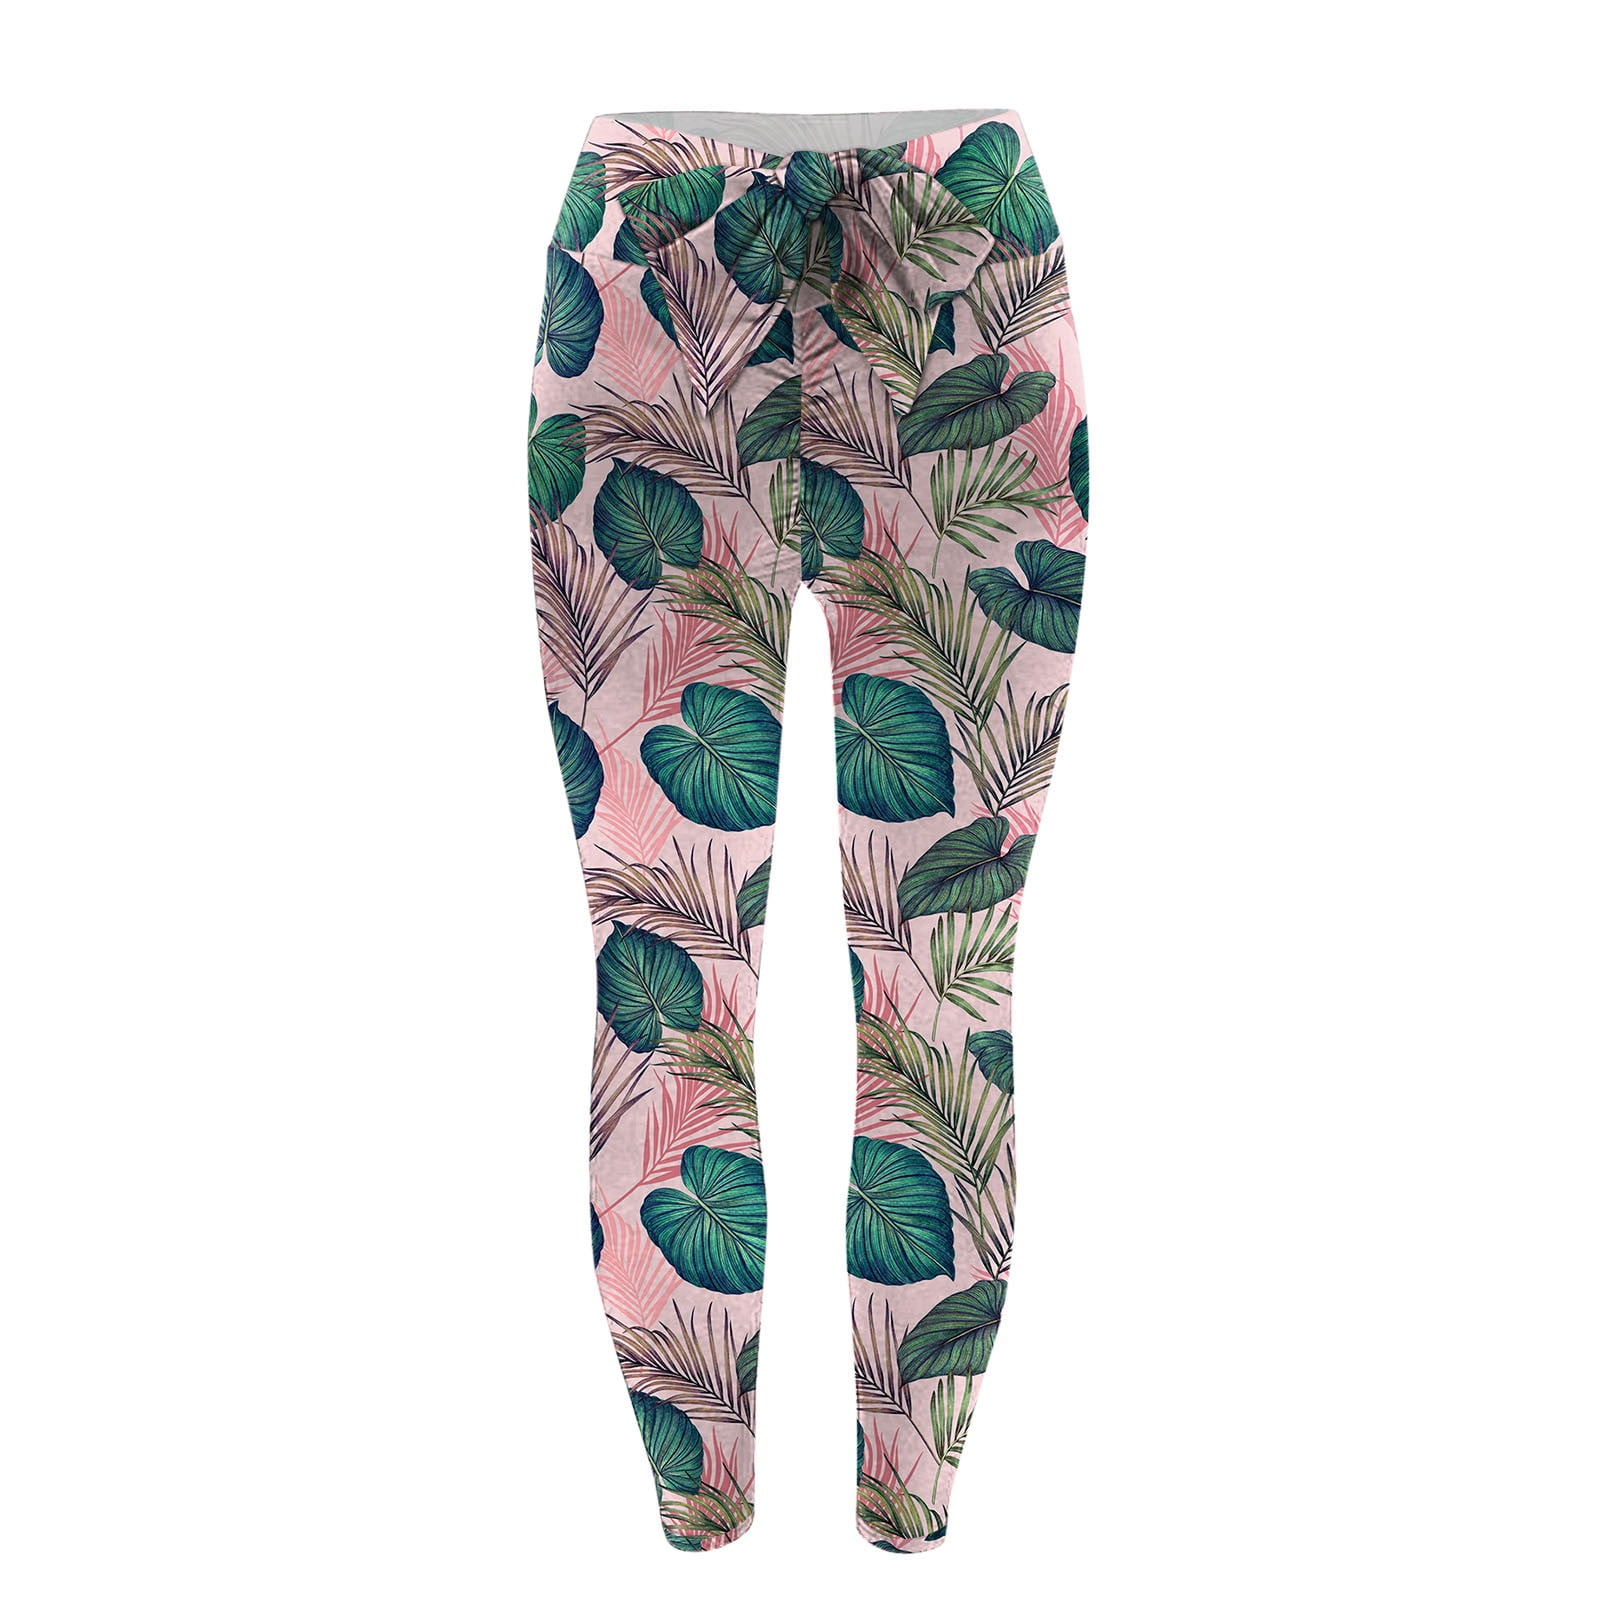 JSGEK Discount Women High Waist Stretch Strethcy Fitness Leggings  Tie-dye/Floral Print Hip Lift Yoga Pants Running Sport Trousers Pink M